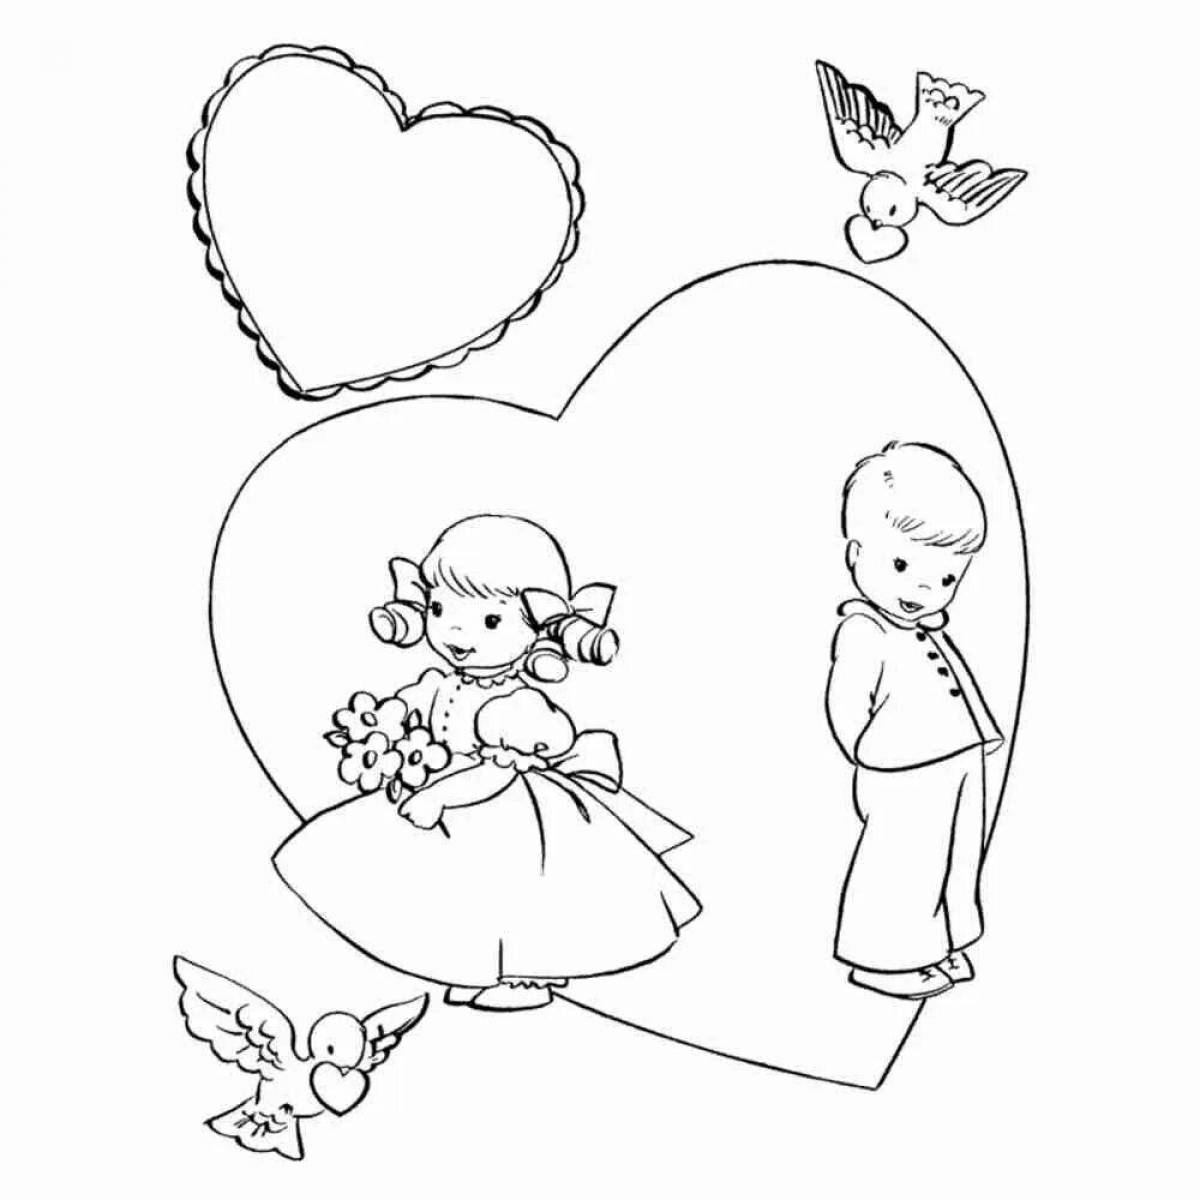 Children's Valentine's Day coloring book